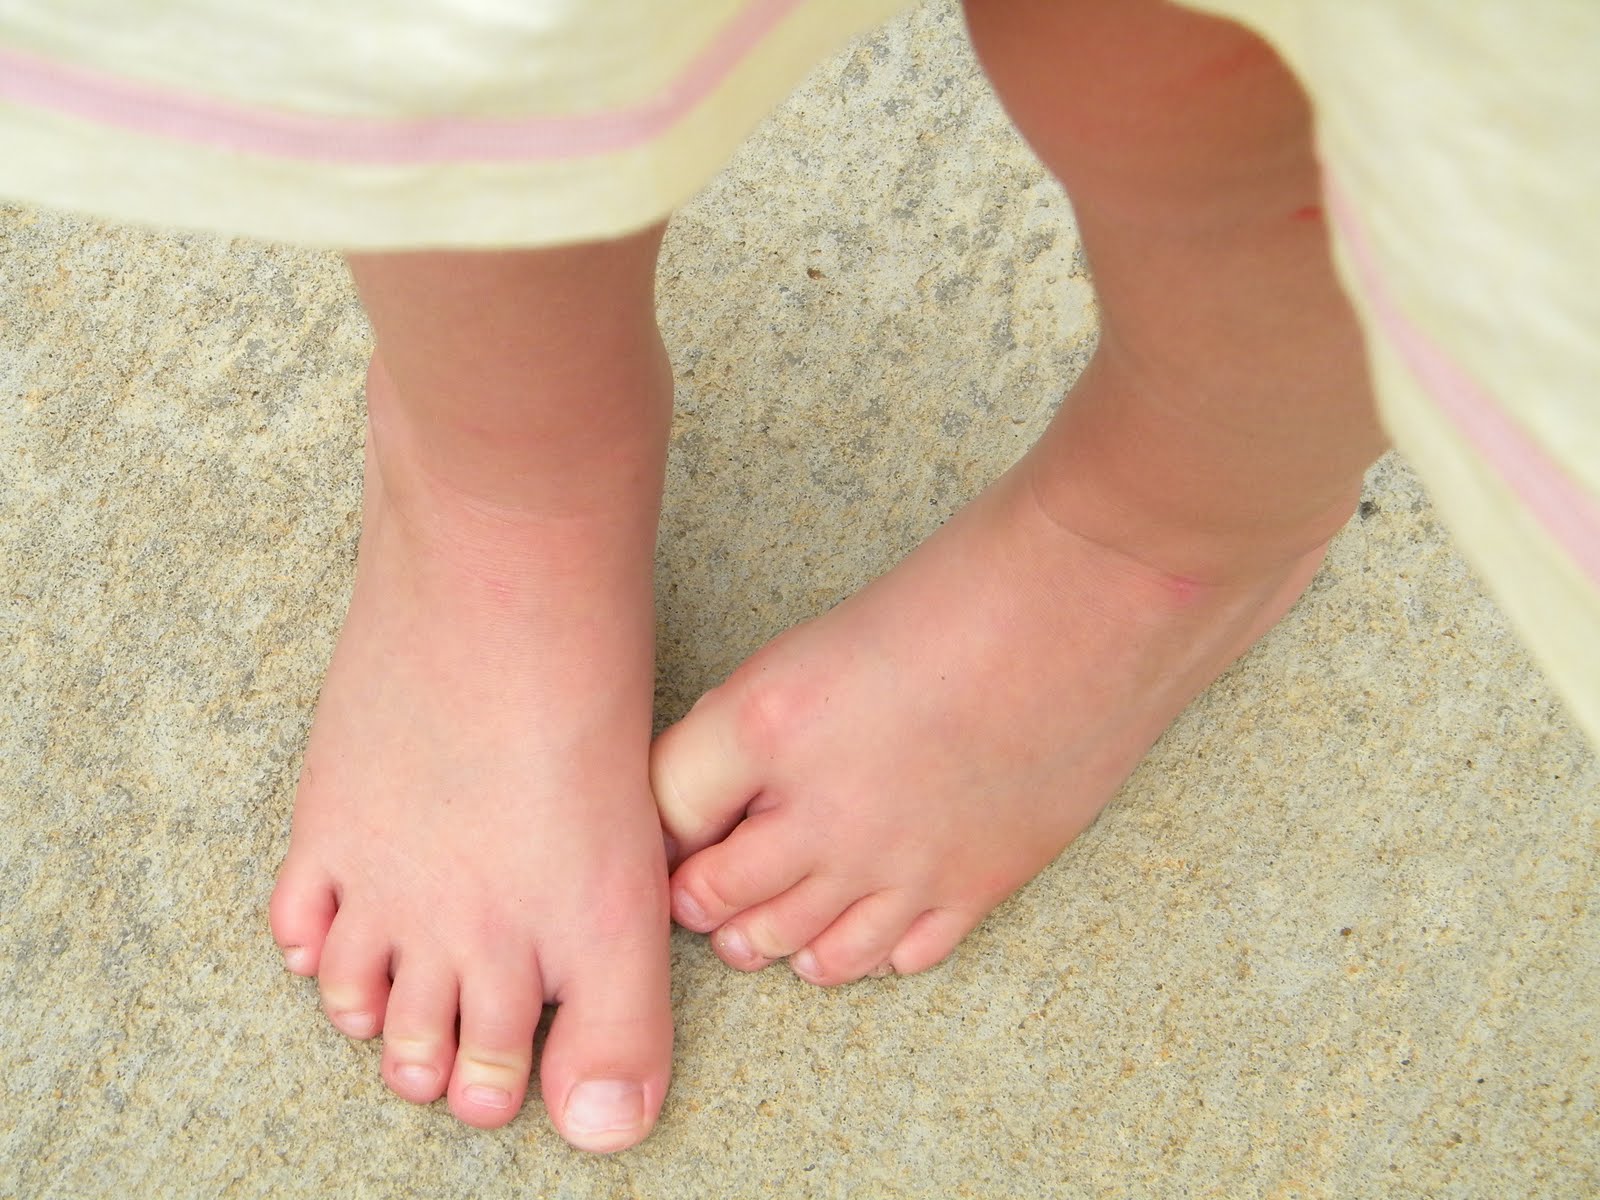 Дети фут. Маленькие feet. Детский тайфлас Феет. Детский foot feet. Kids Челленджер feet.